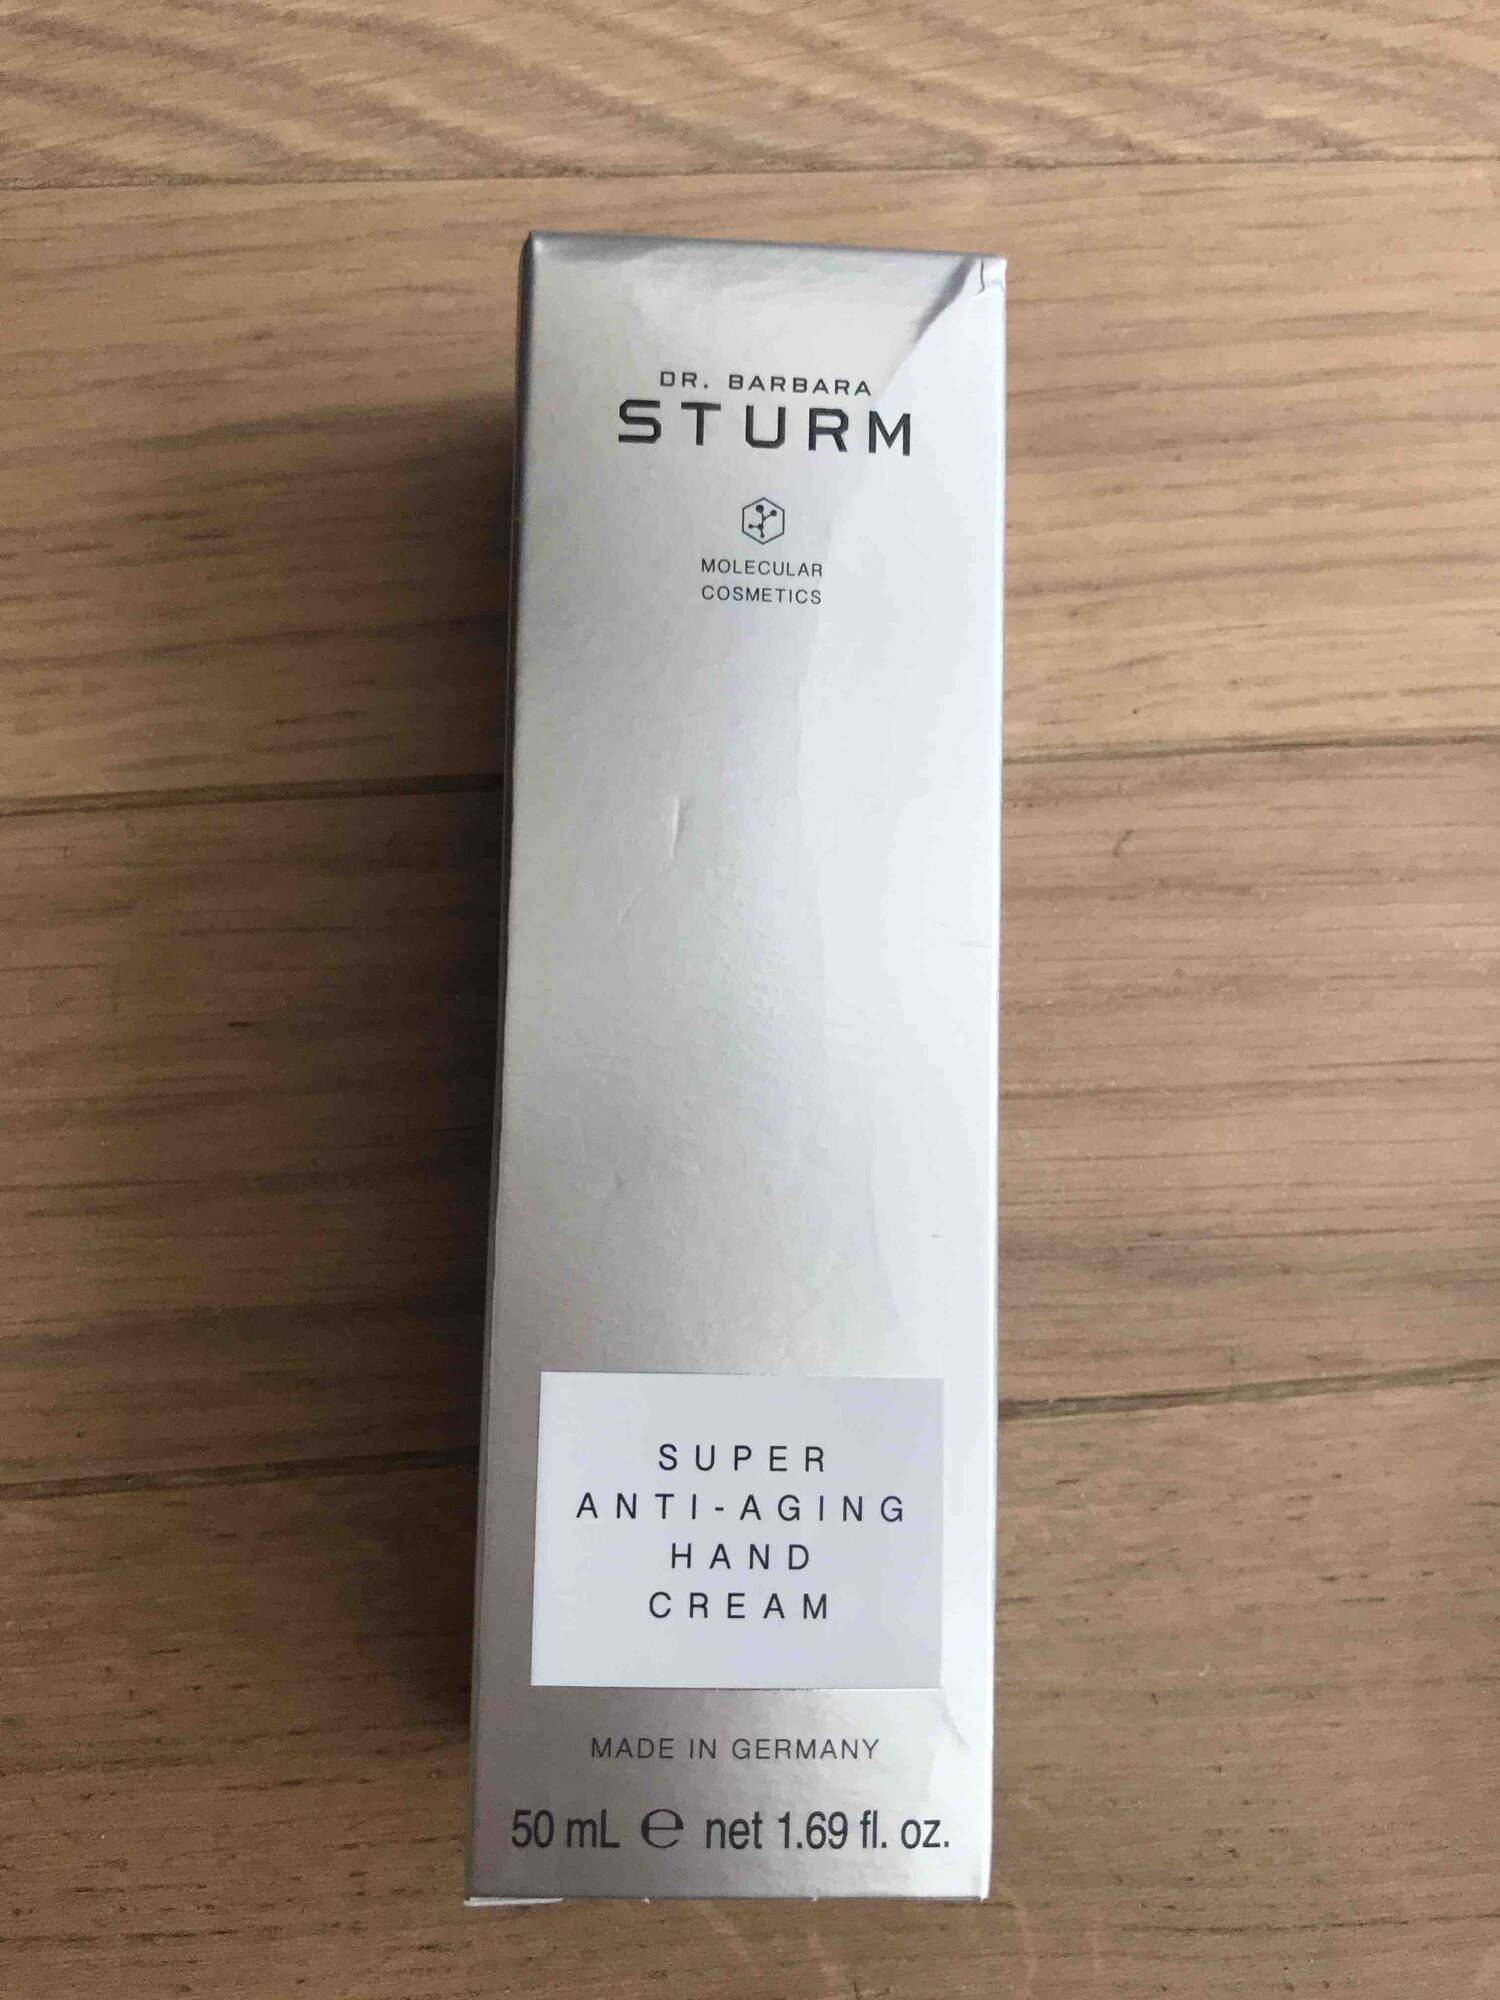 DR BARBARA STURM - Super anti-aging hand cream